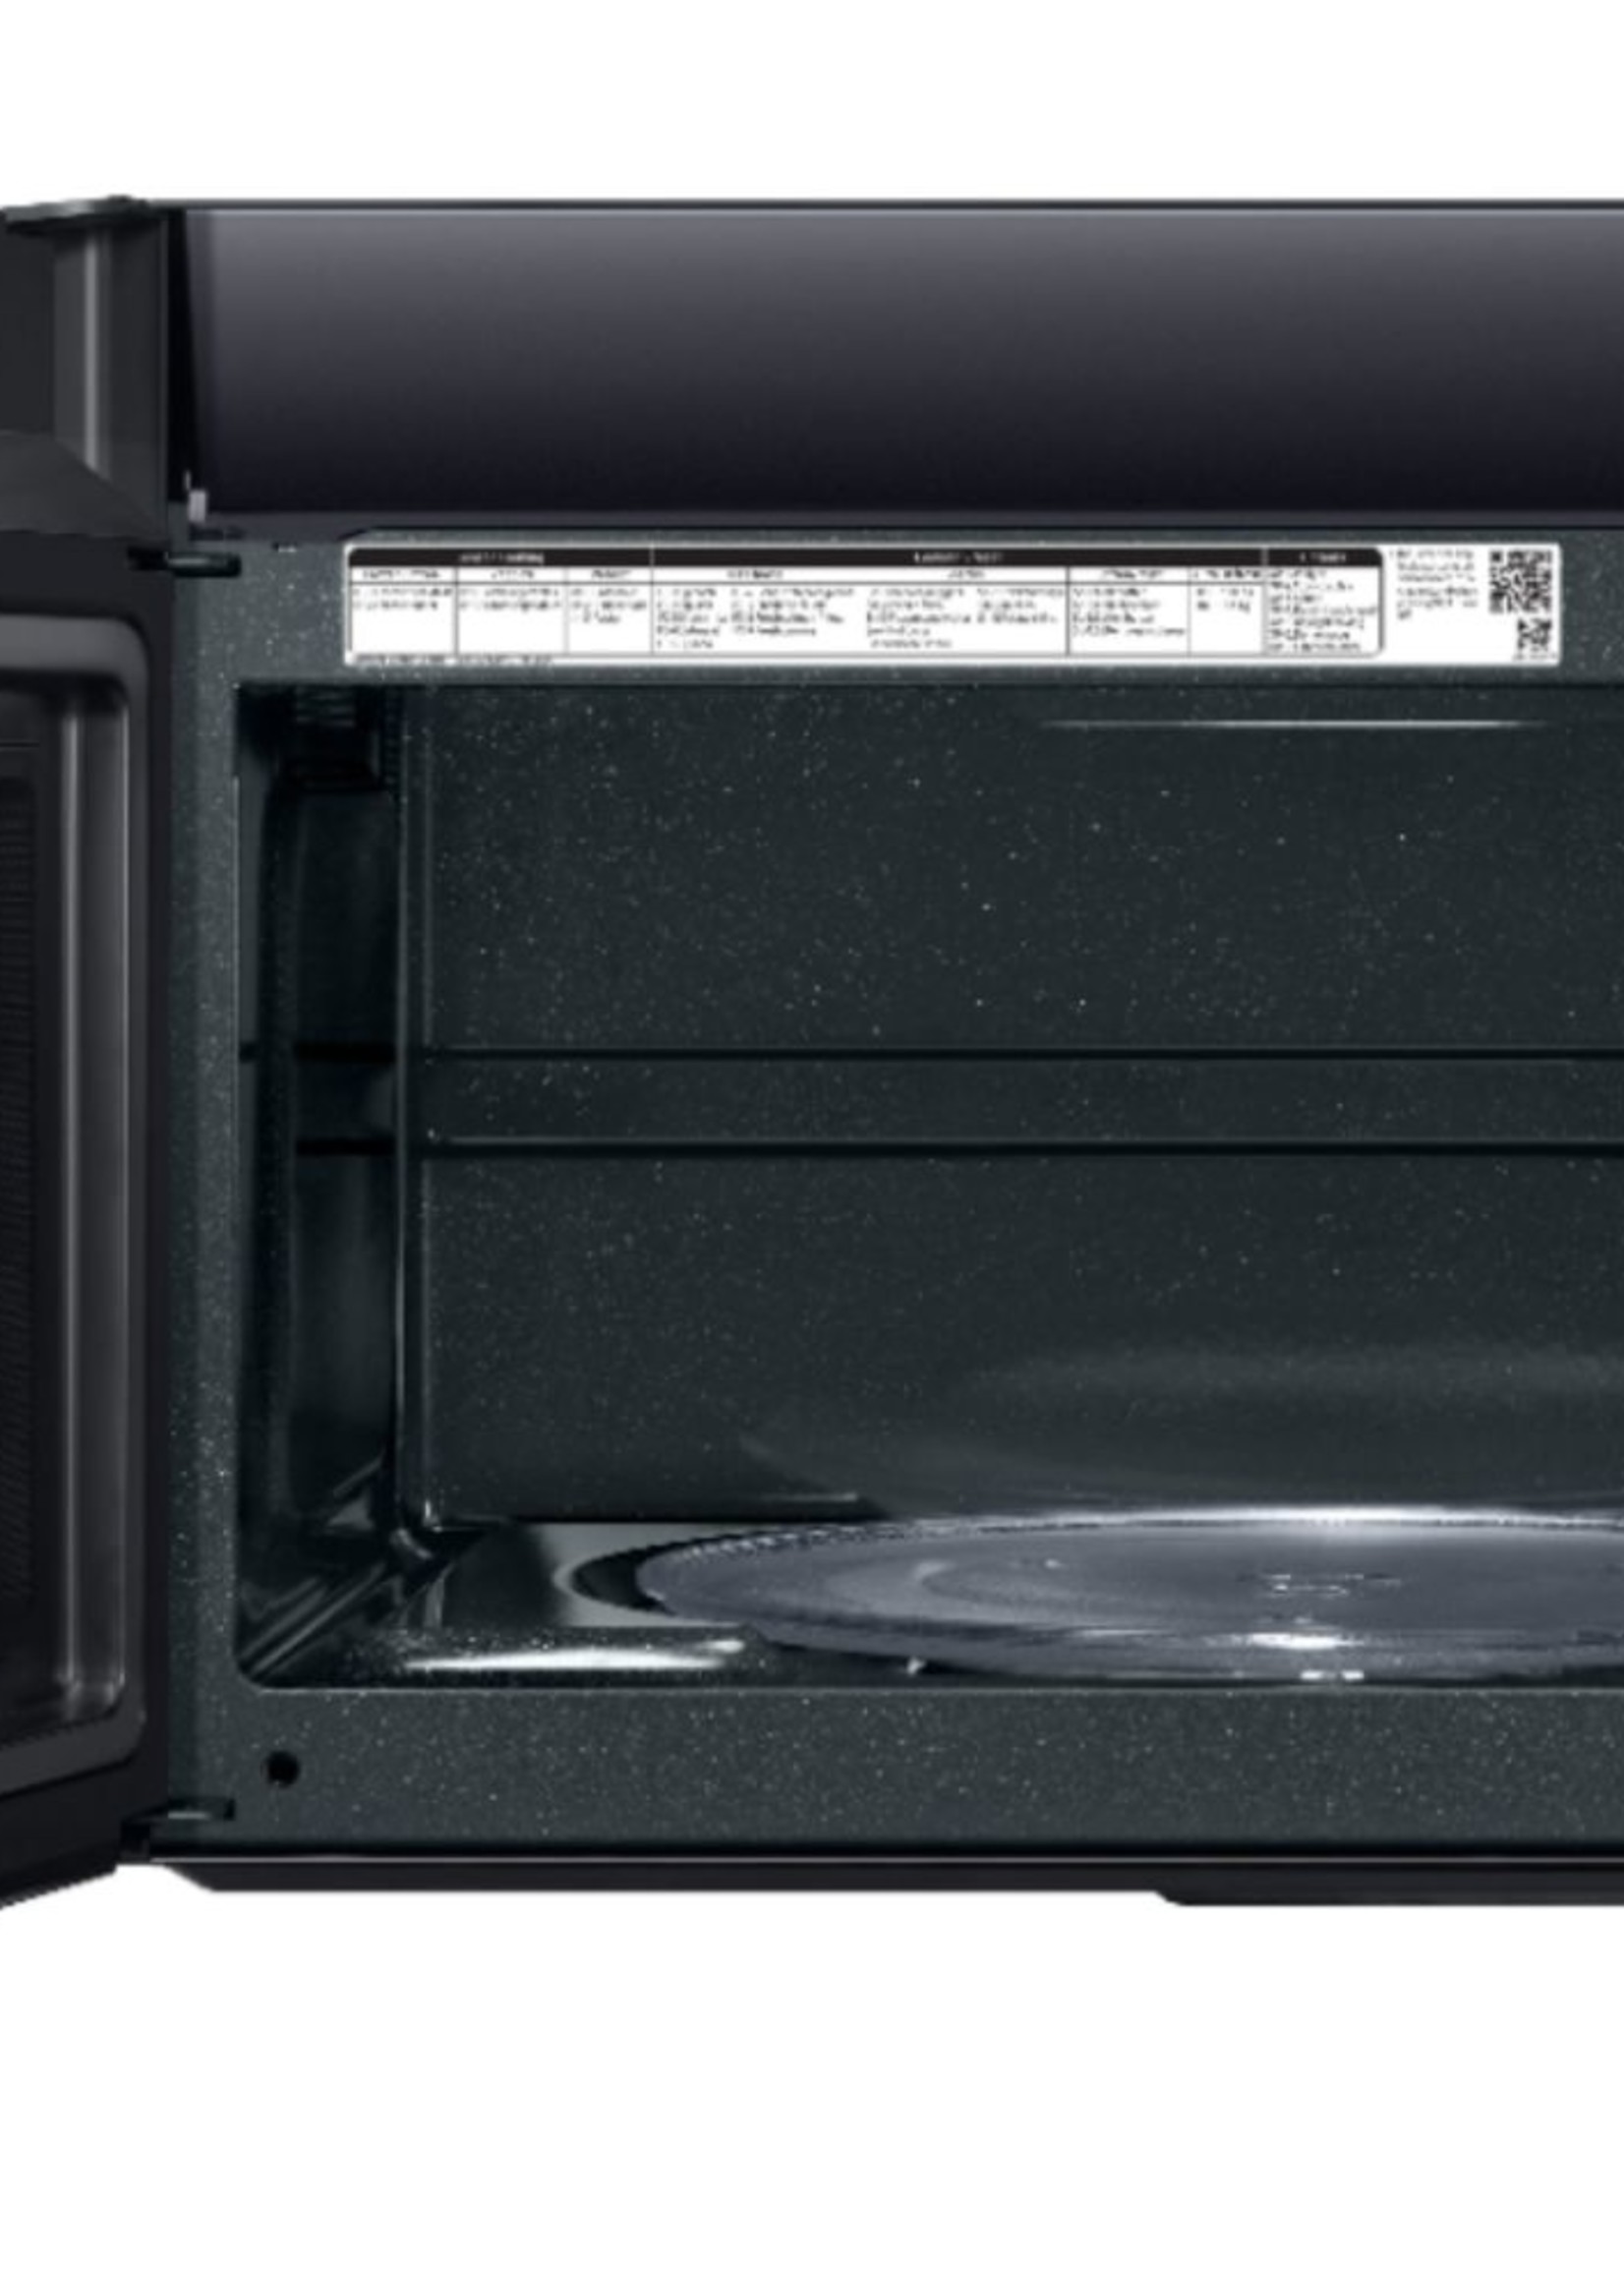 Samsung * Samsung  ME19R7041FS   1 .9-cu ft Over-the-Range Microwave with Sensor Cooking (Fingerprint Resistant Stainless Steel)